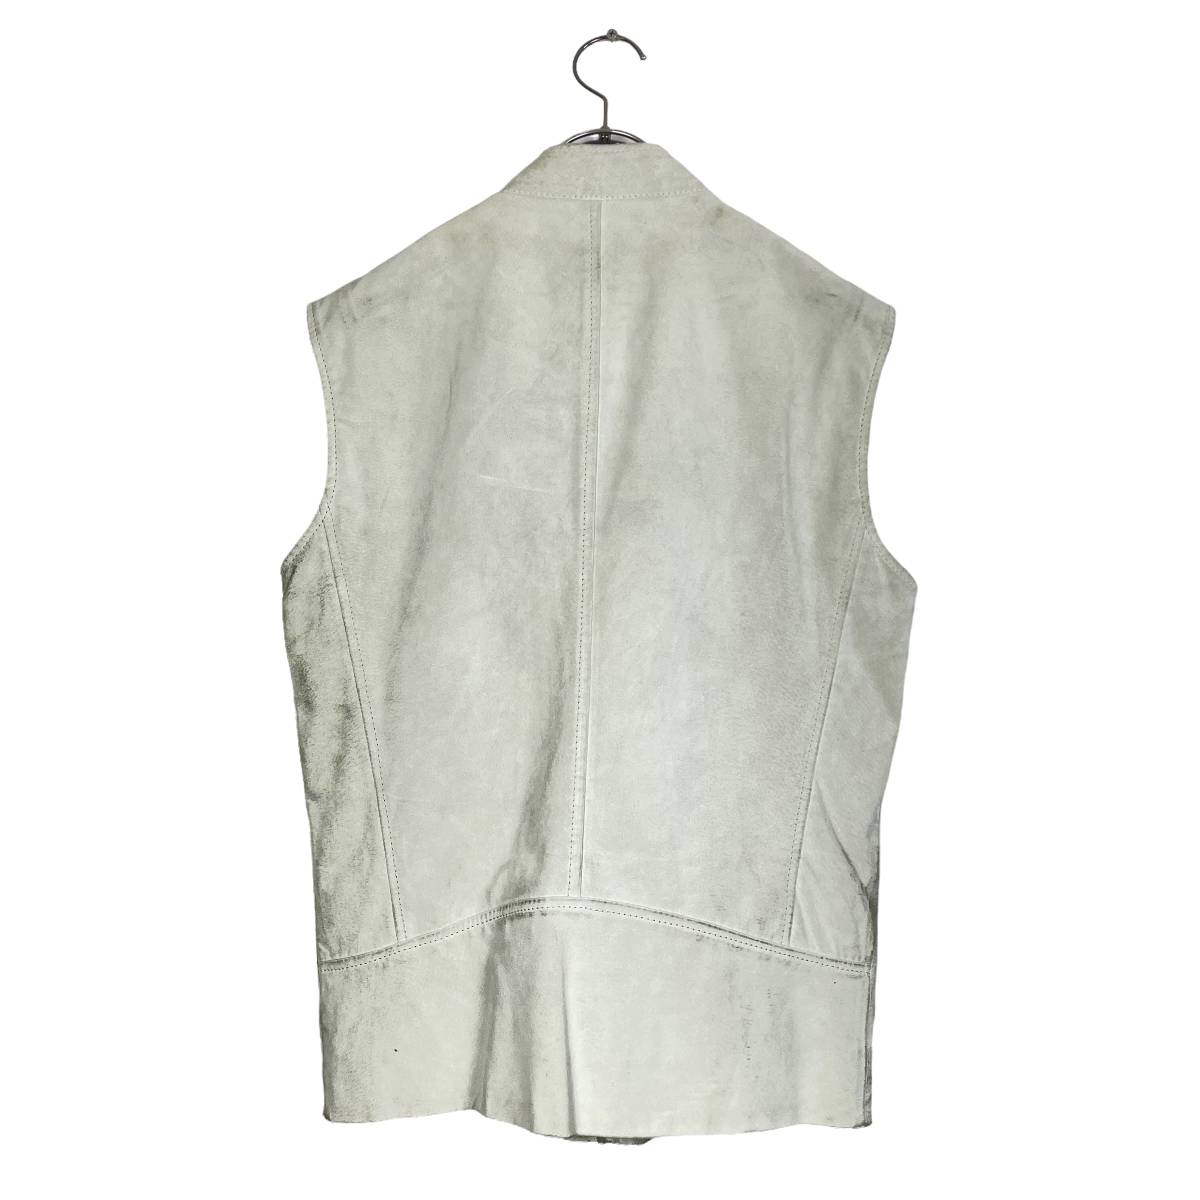 Maison Margiela(メゾン マルジェラ) pig leather vest (white)_画像4